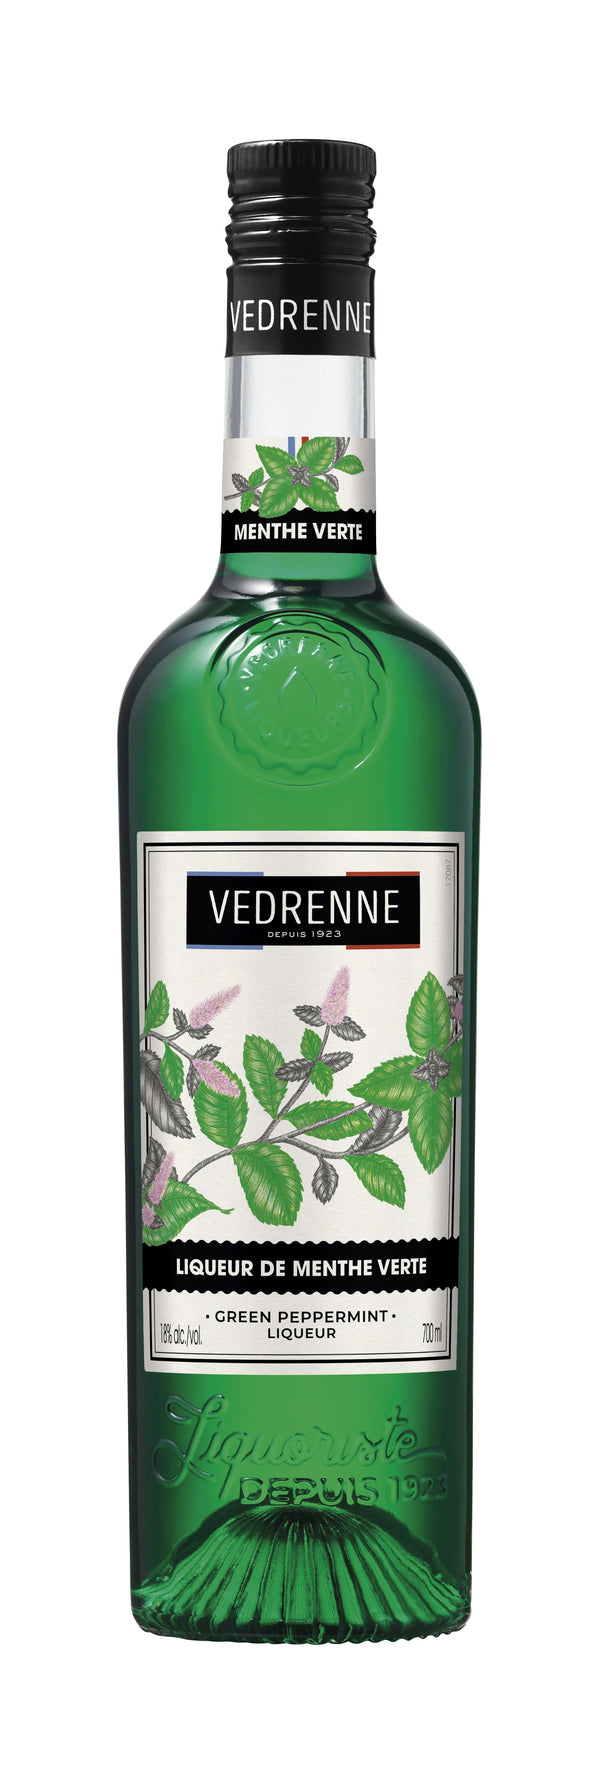 Vedrenne Green Peppermint Liqueur 70cl Bottle